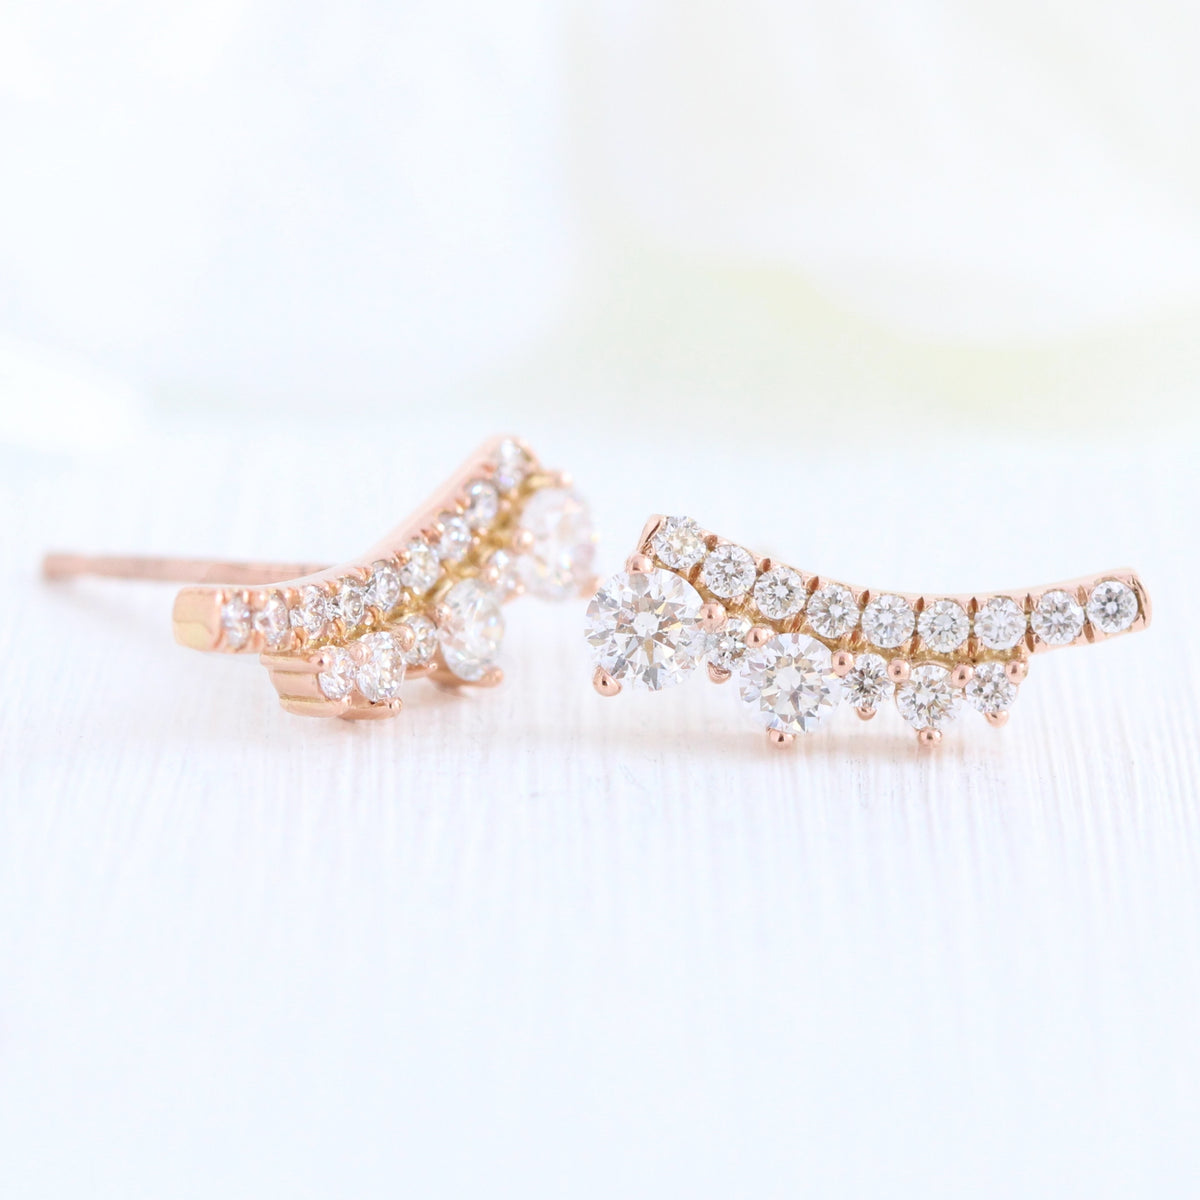 Tiara large diamond earrings in rose gold studs la more design jewelry